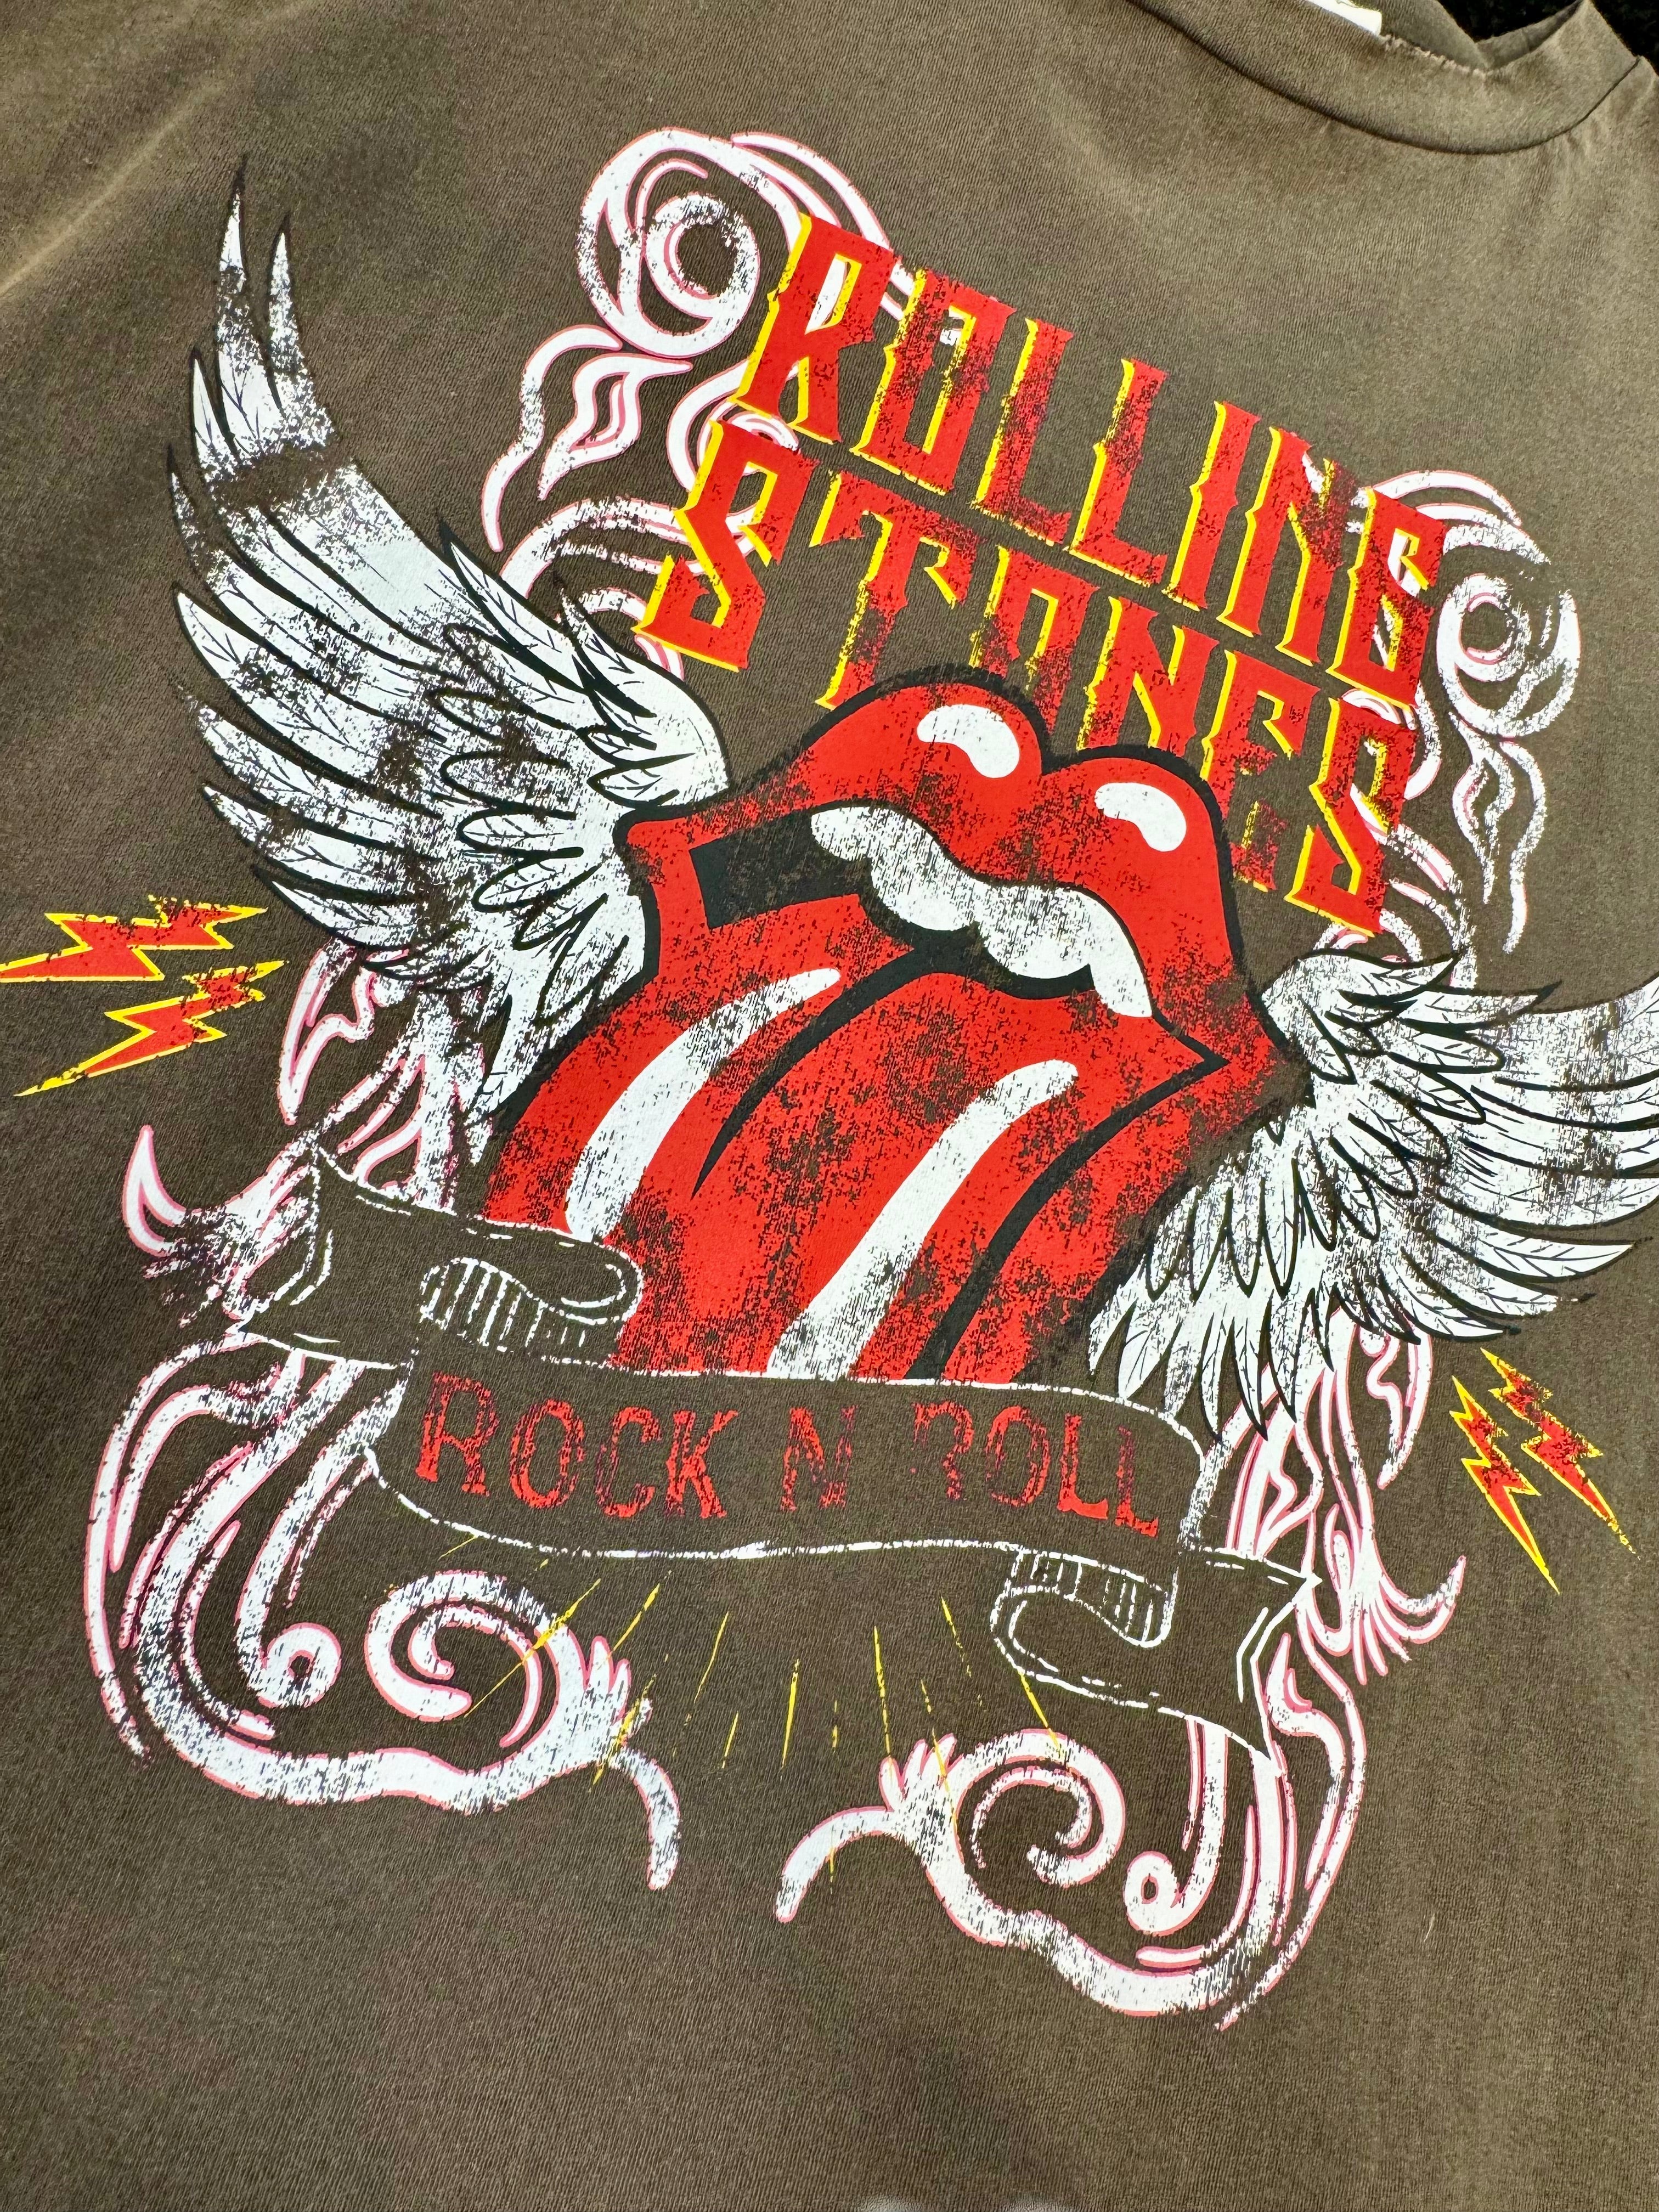 Rolling Stones T-Shirt Dress